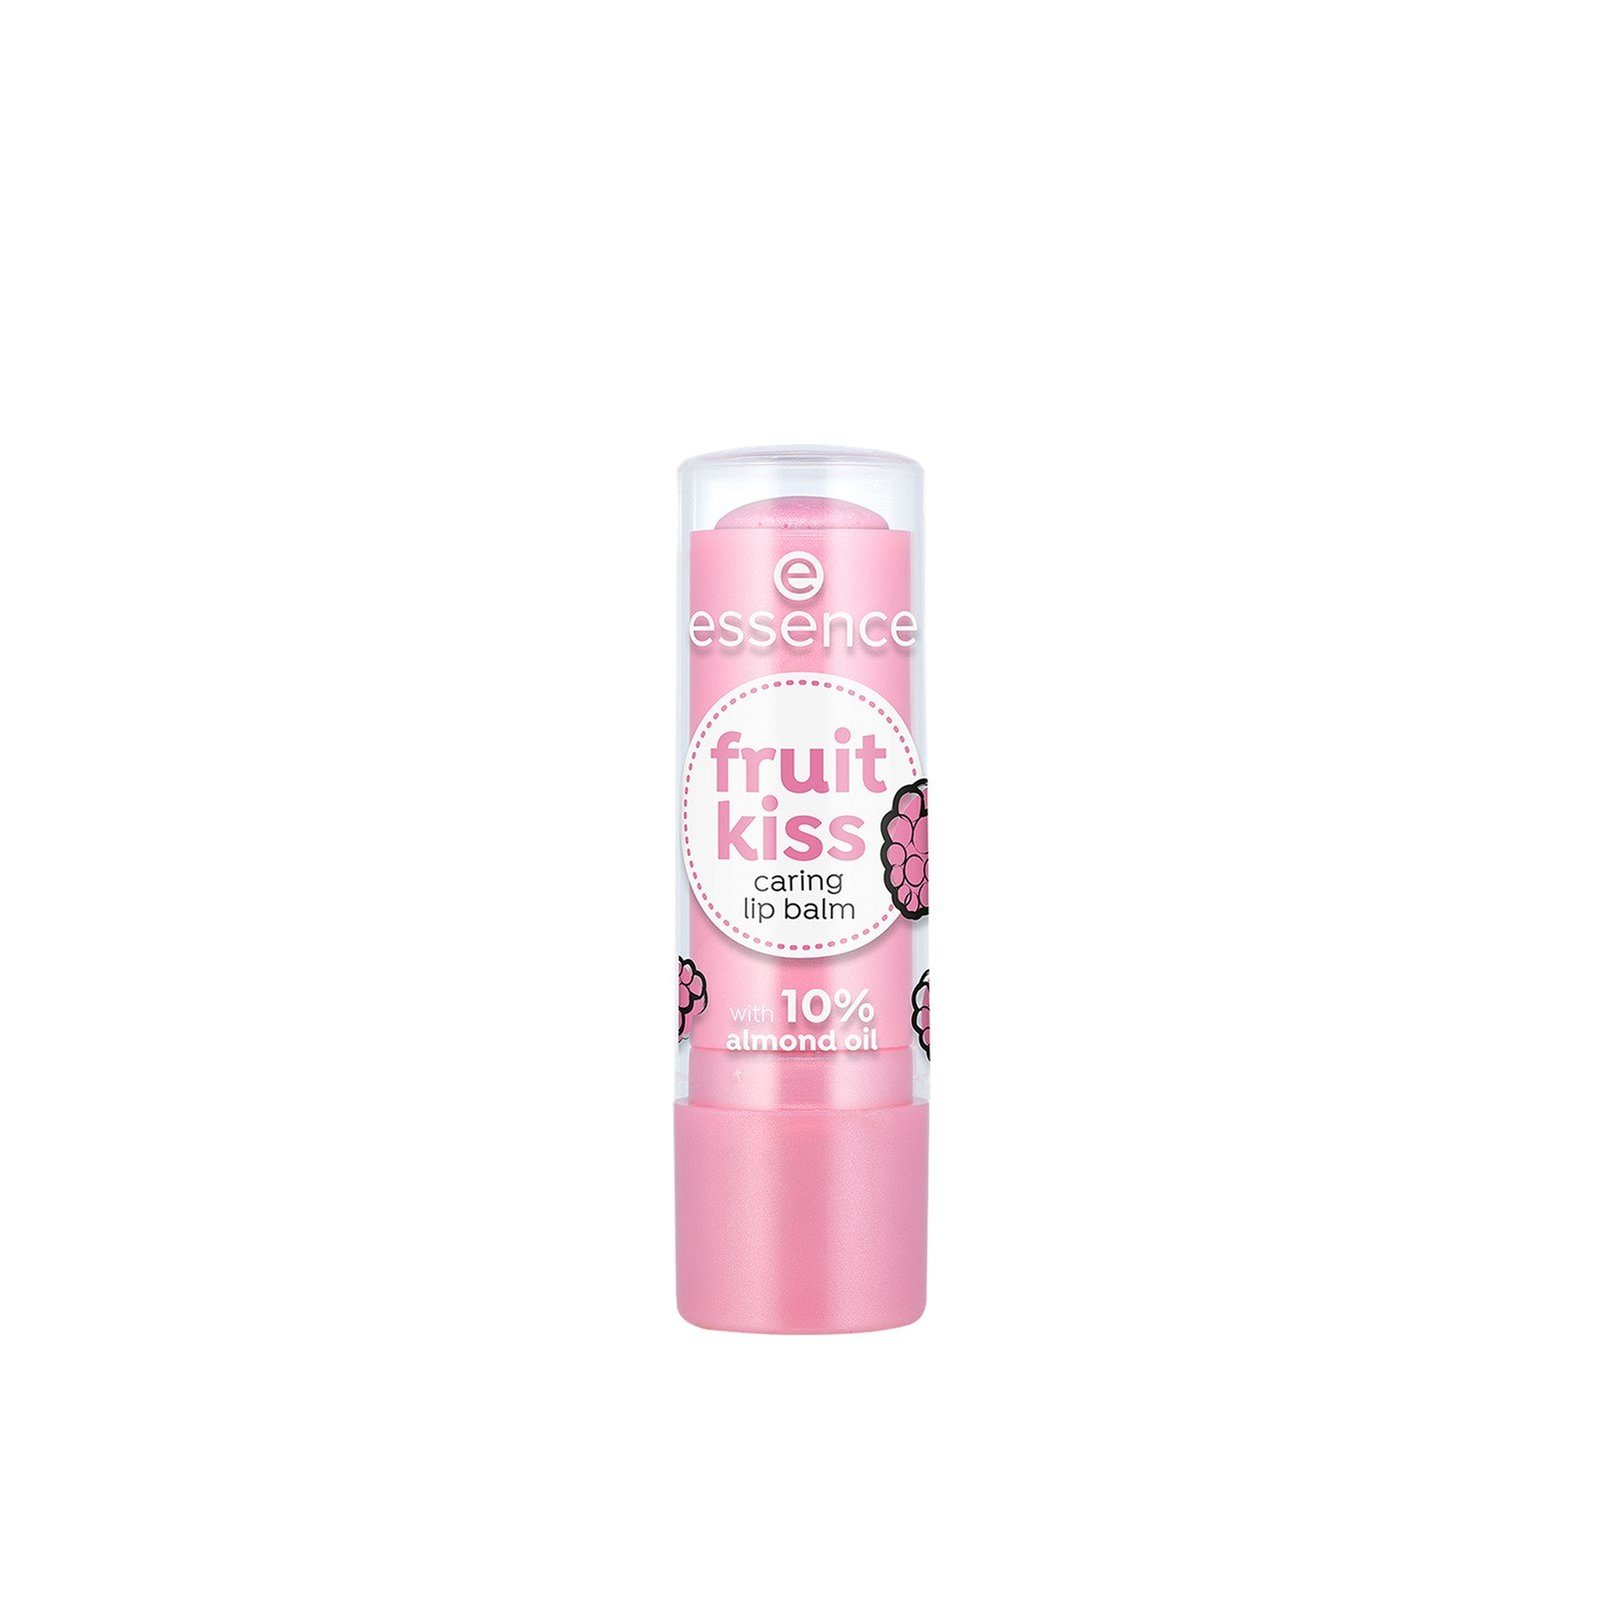 essence Fruit Kiss Caring Lip Balm 01 Raspberry Dream 4.8g (0.16 oz)